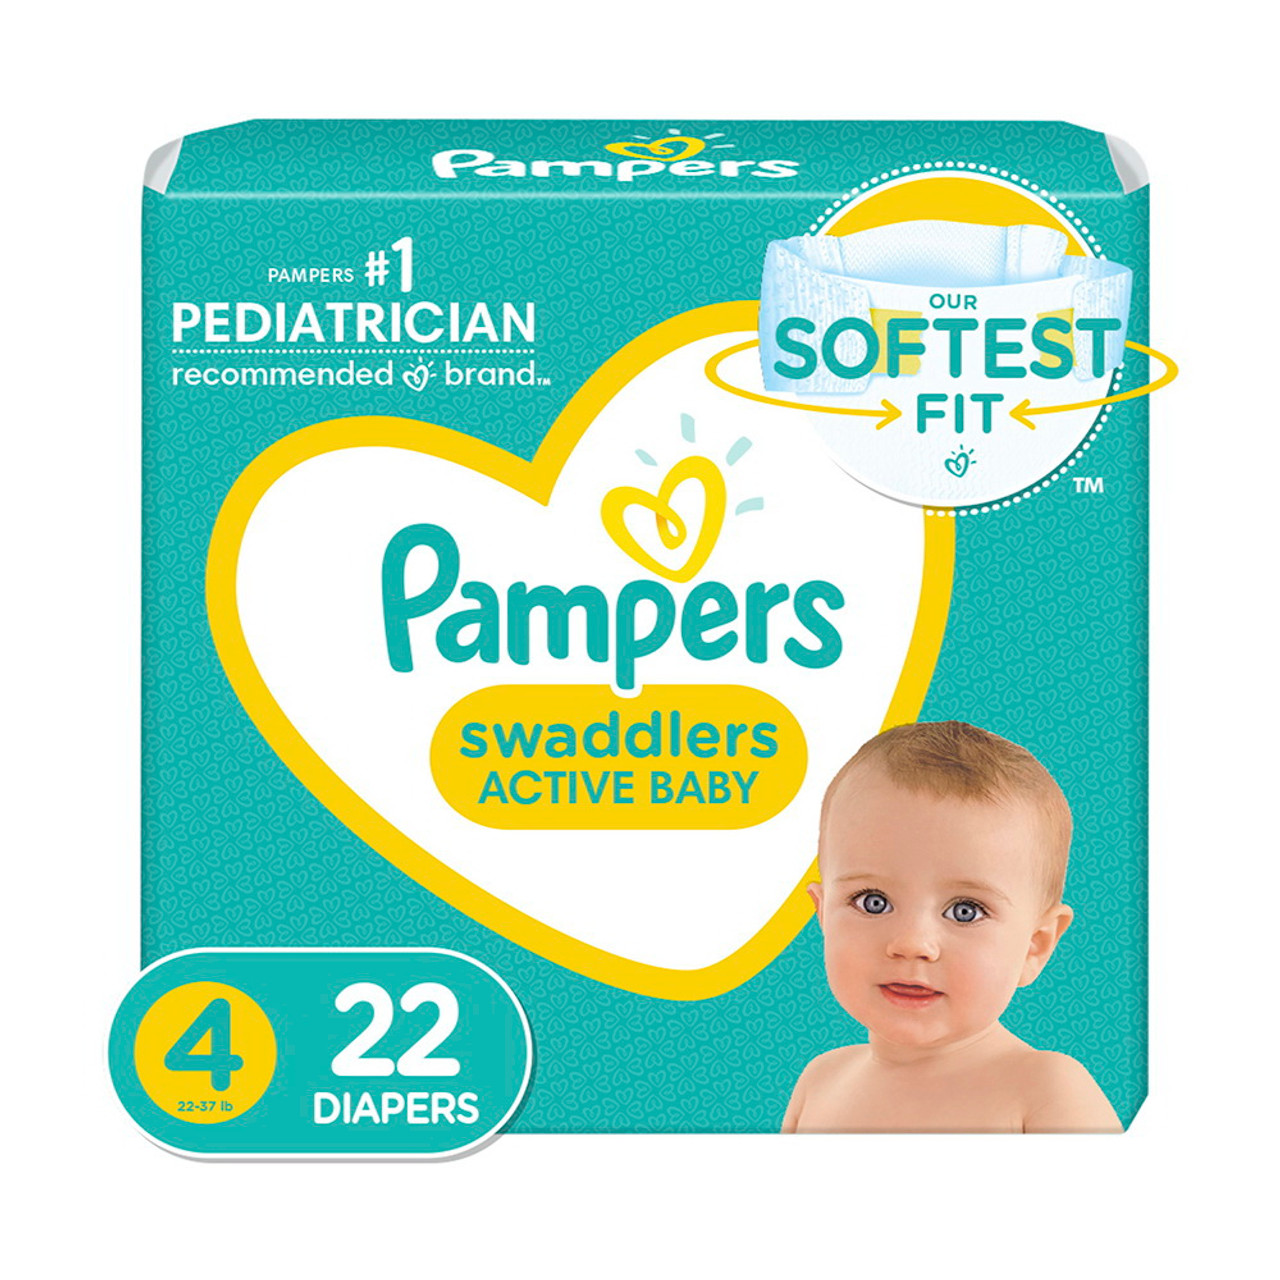 ingesteld Aanvankelijk handleiding Pampers Swaddlers Diapers Active Baby Softest Fit and Absorbent, Size 4, 22  Ea